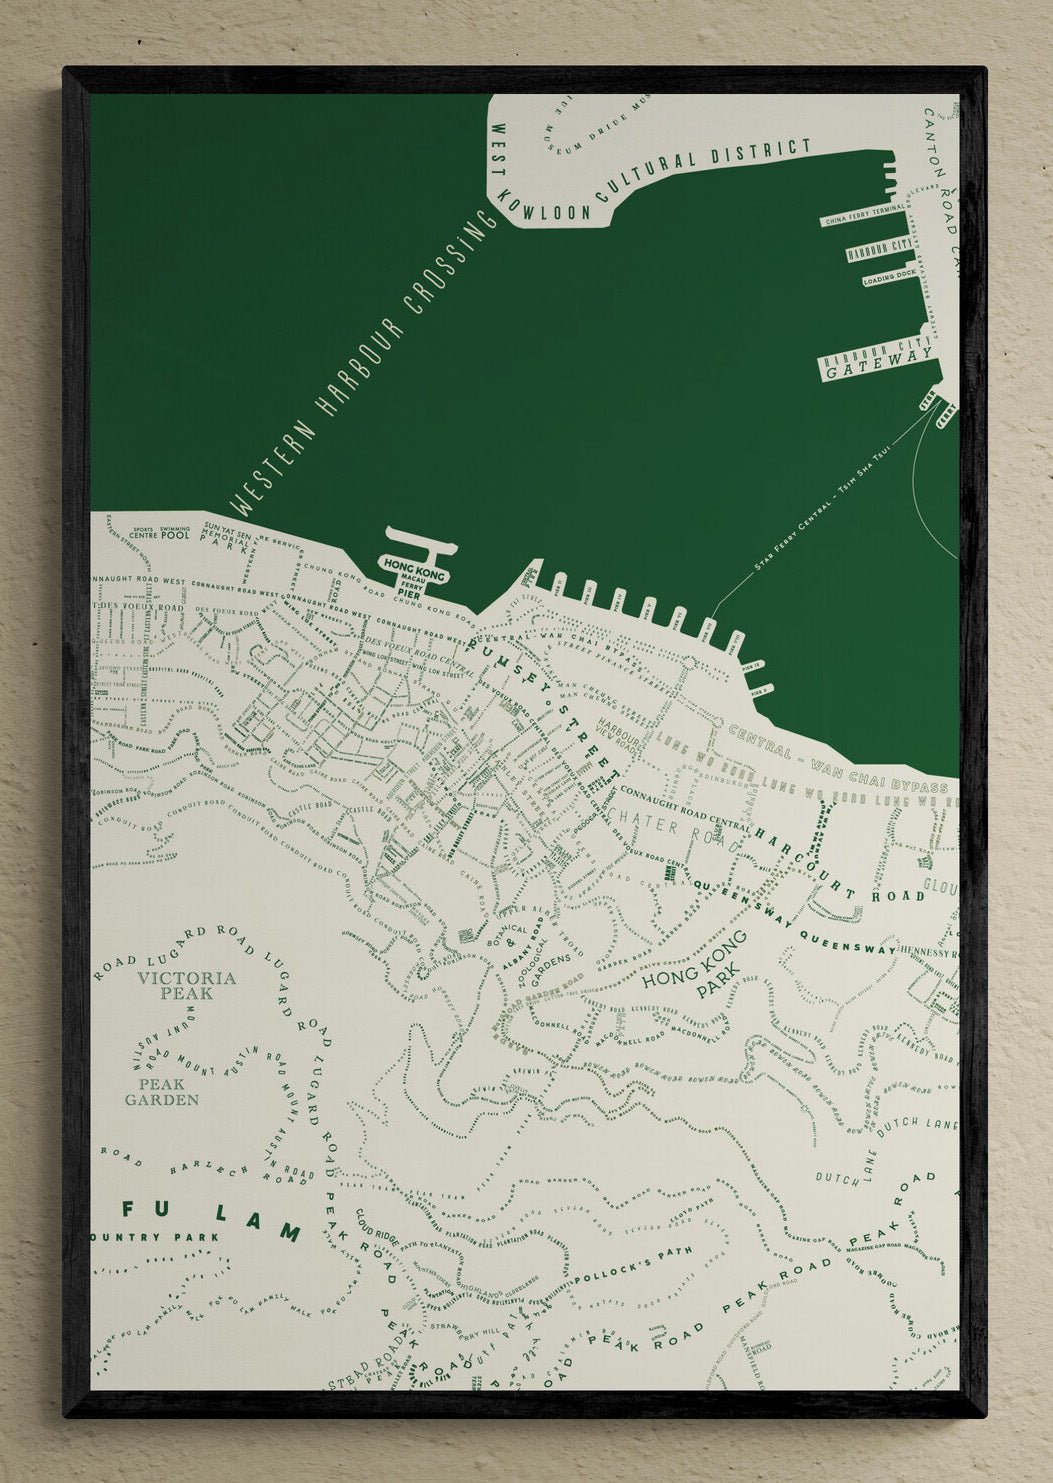 Custom Victoria Harbour Map - tinyislandmaps